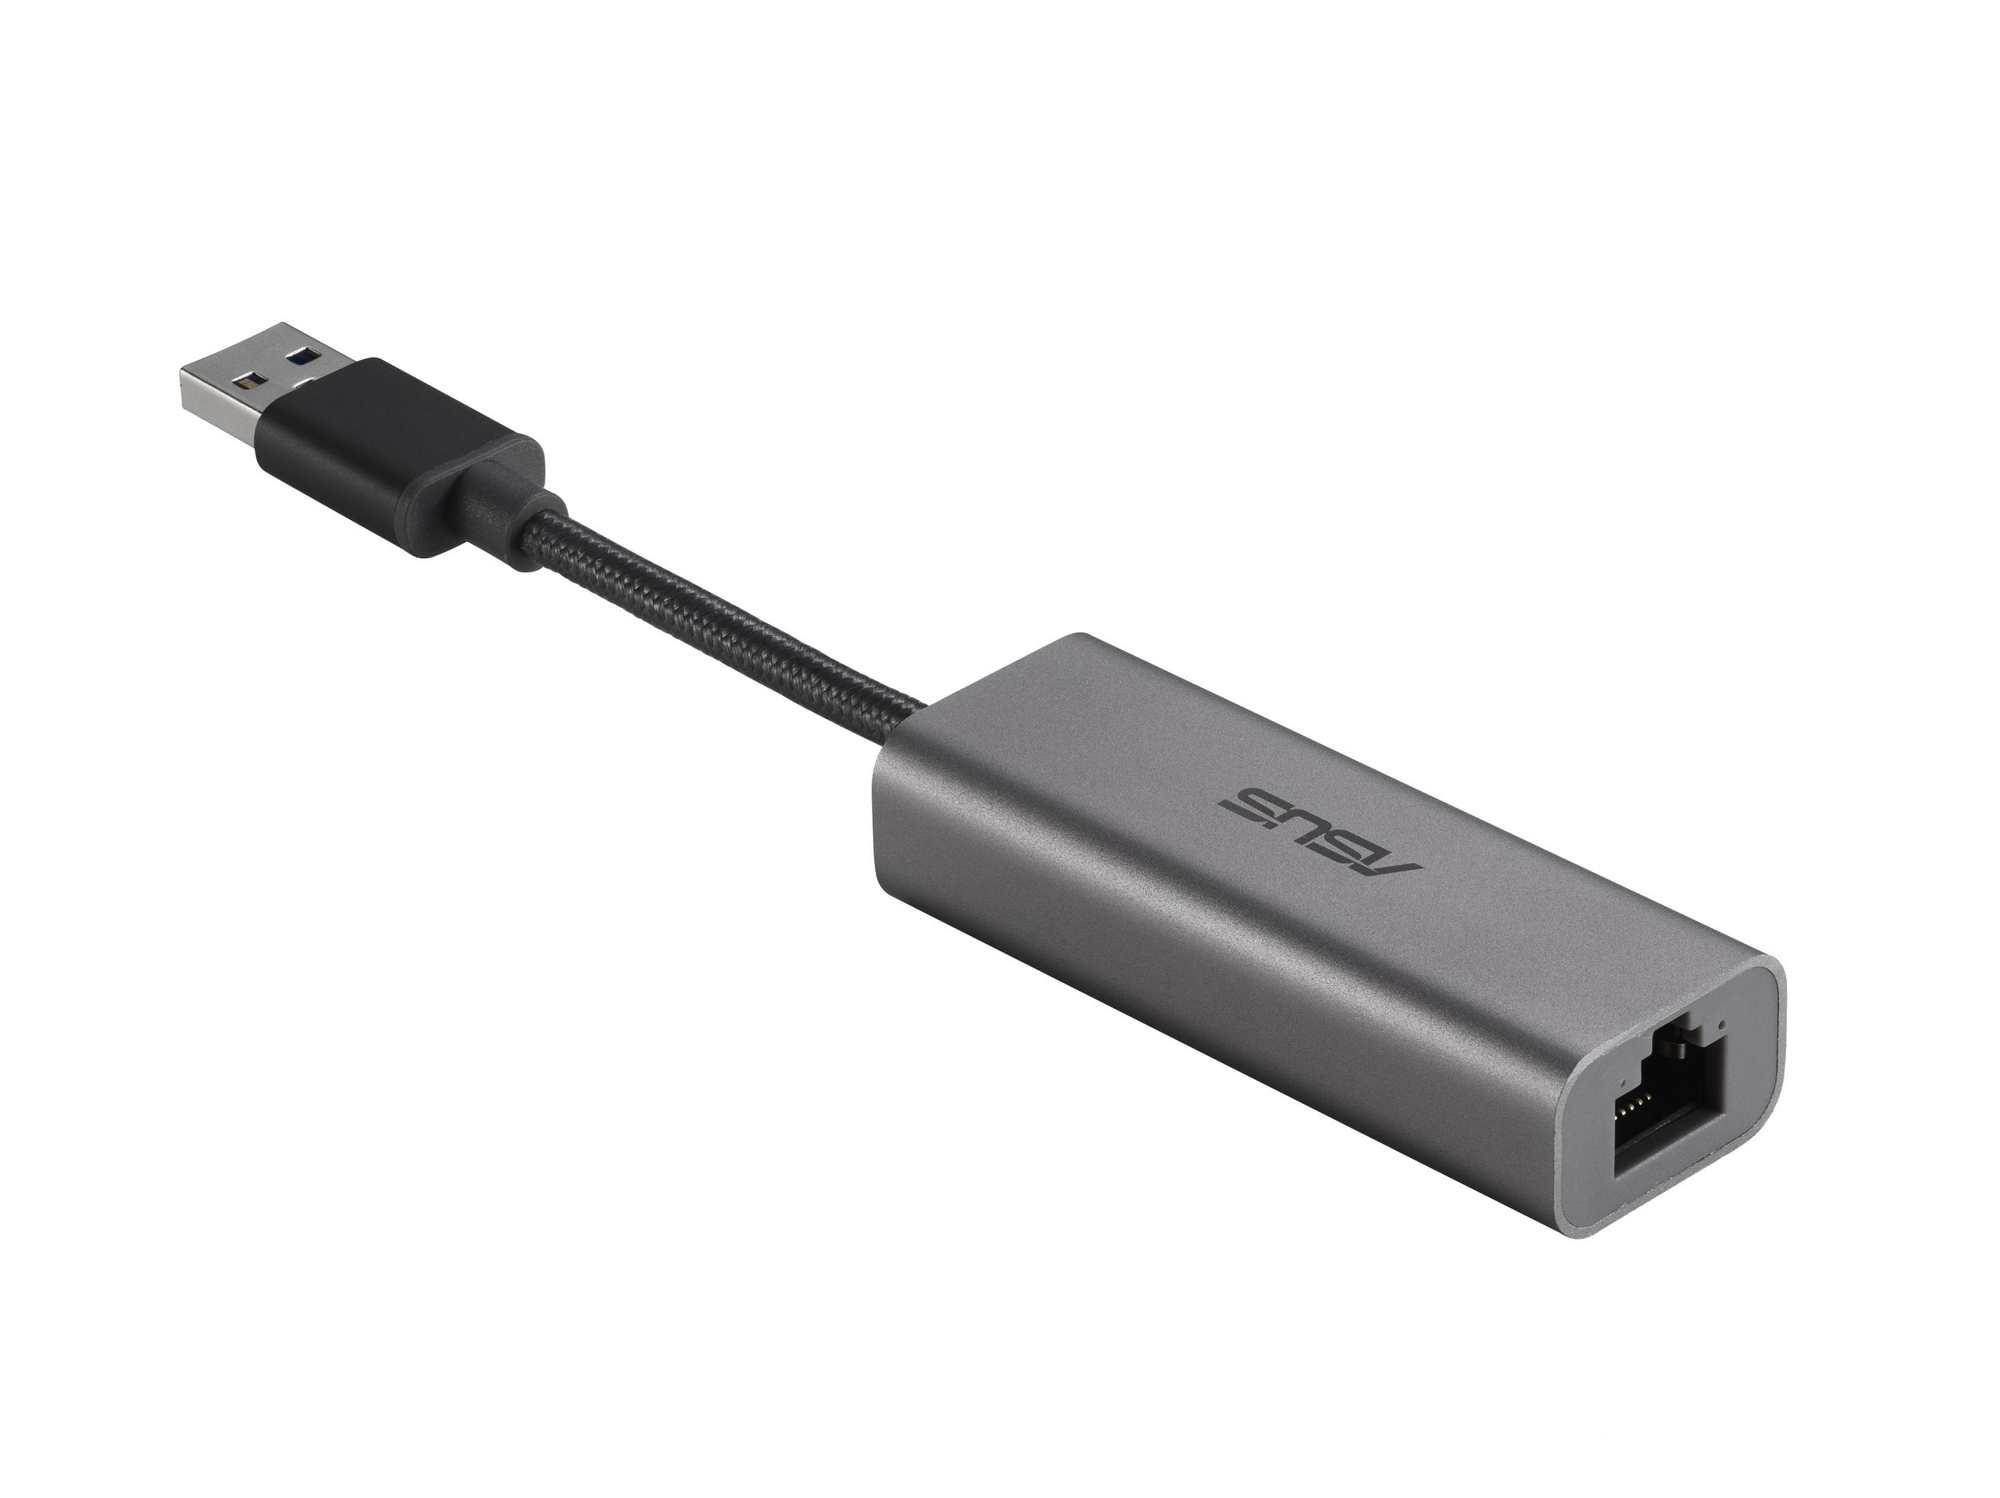 ASUS USB-C2500 2.5G USB Dongle (2,5 Gbit/s, Plug & Play, USB 3.0, design compact) 2